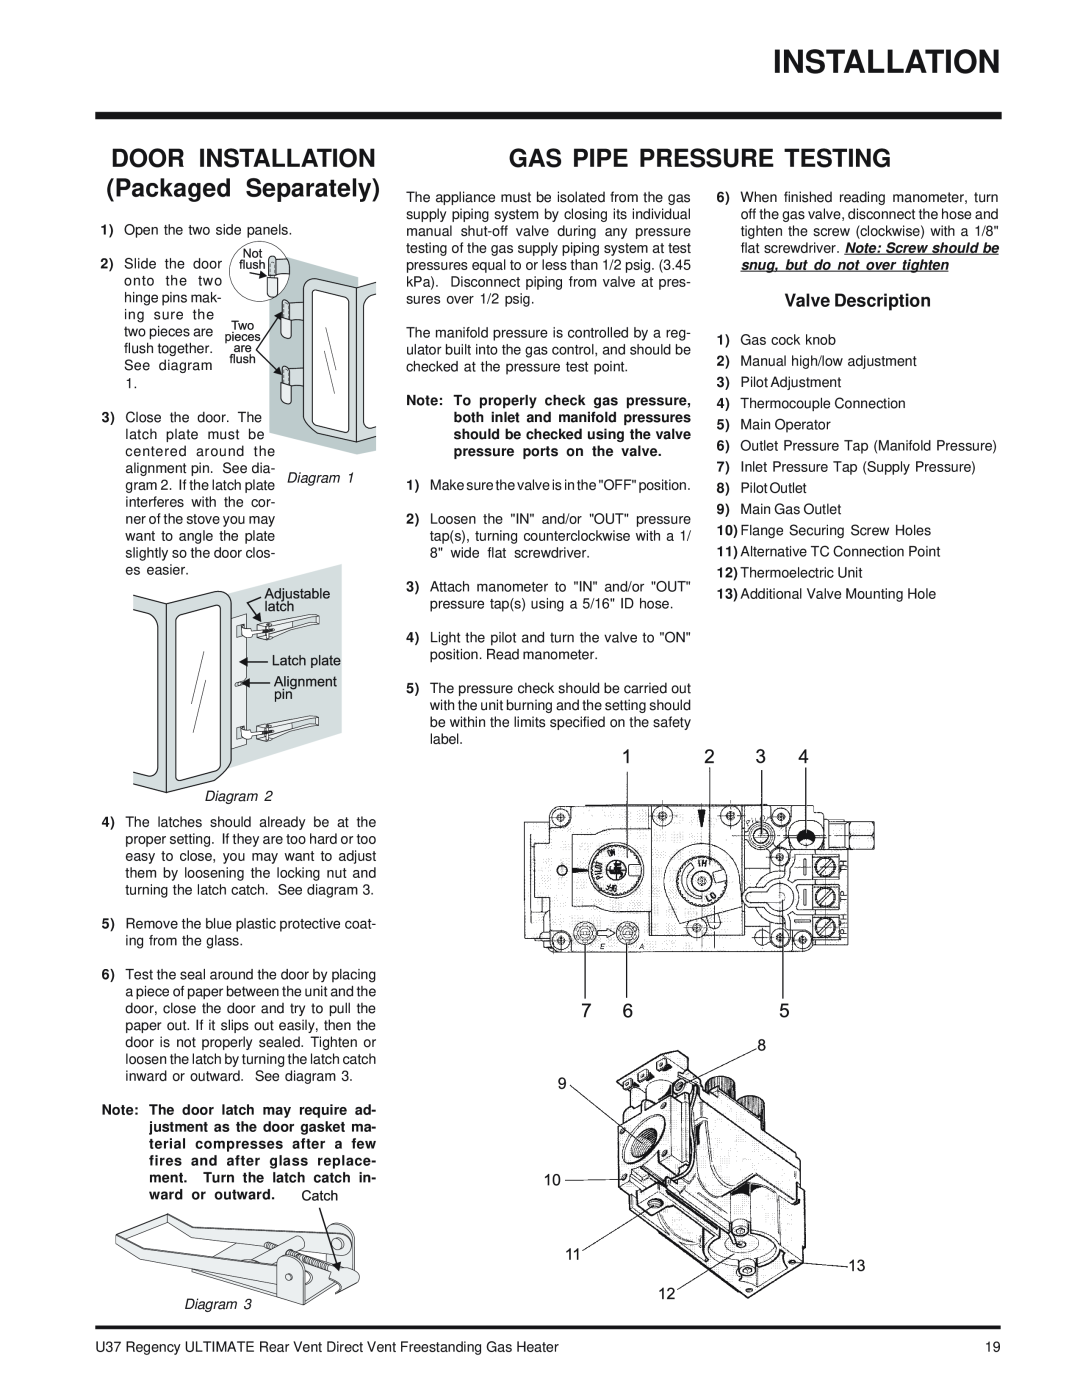 Regency U37-NG NATURAL GAS Installation, DOOR INSTALLATION Packaged Separately, Gas Pipe Pressure Testing, Diagram 